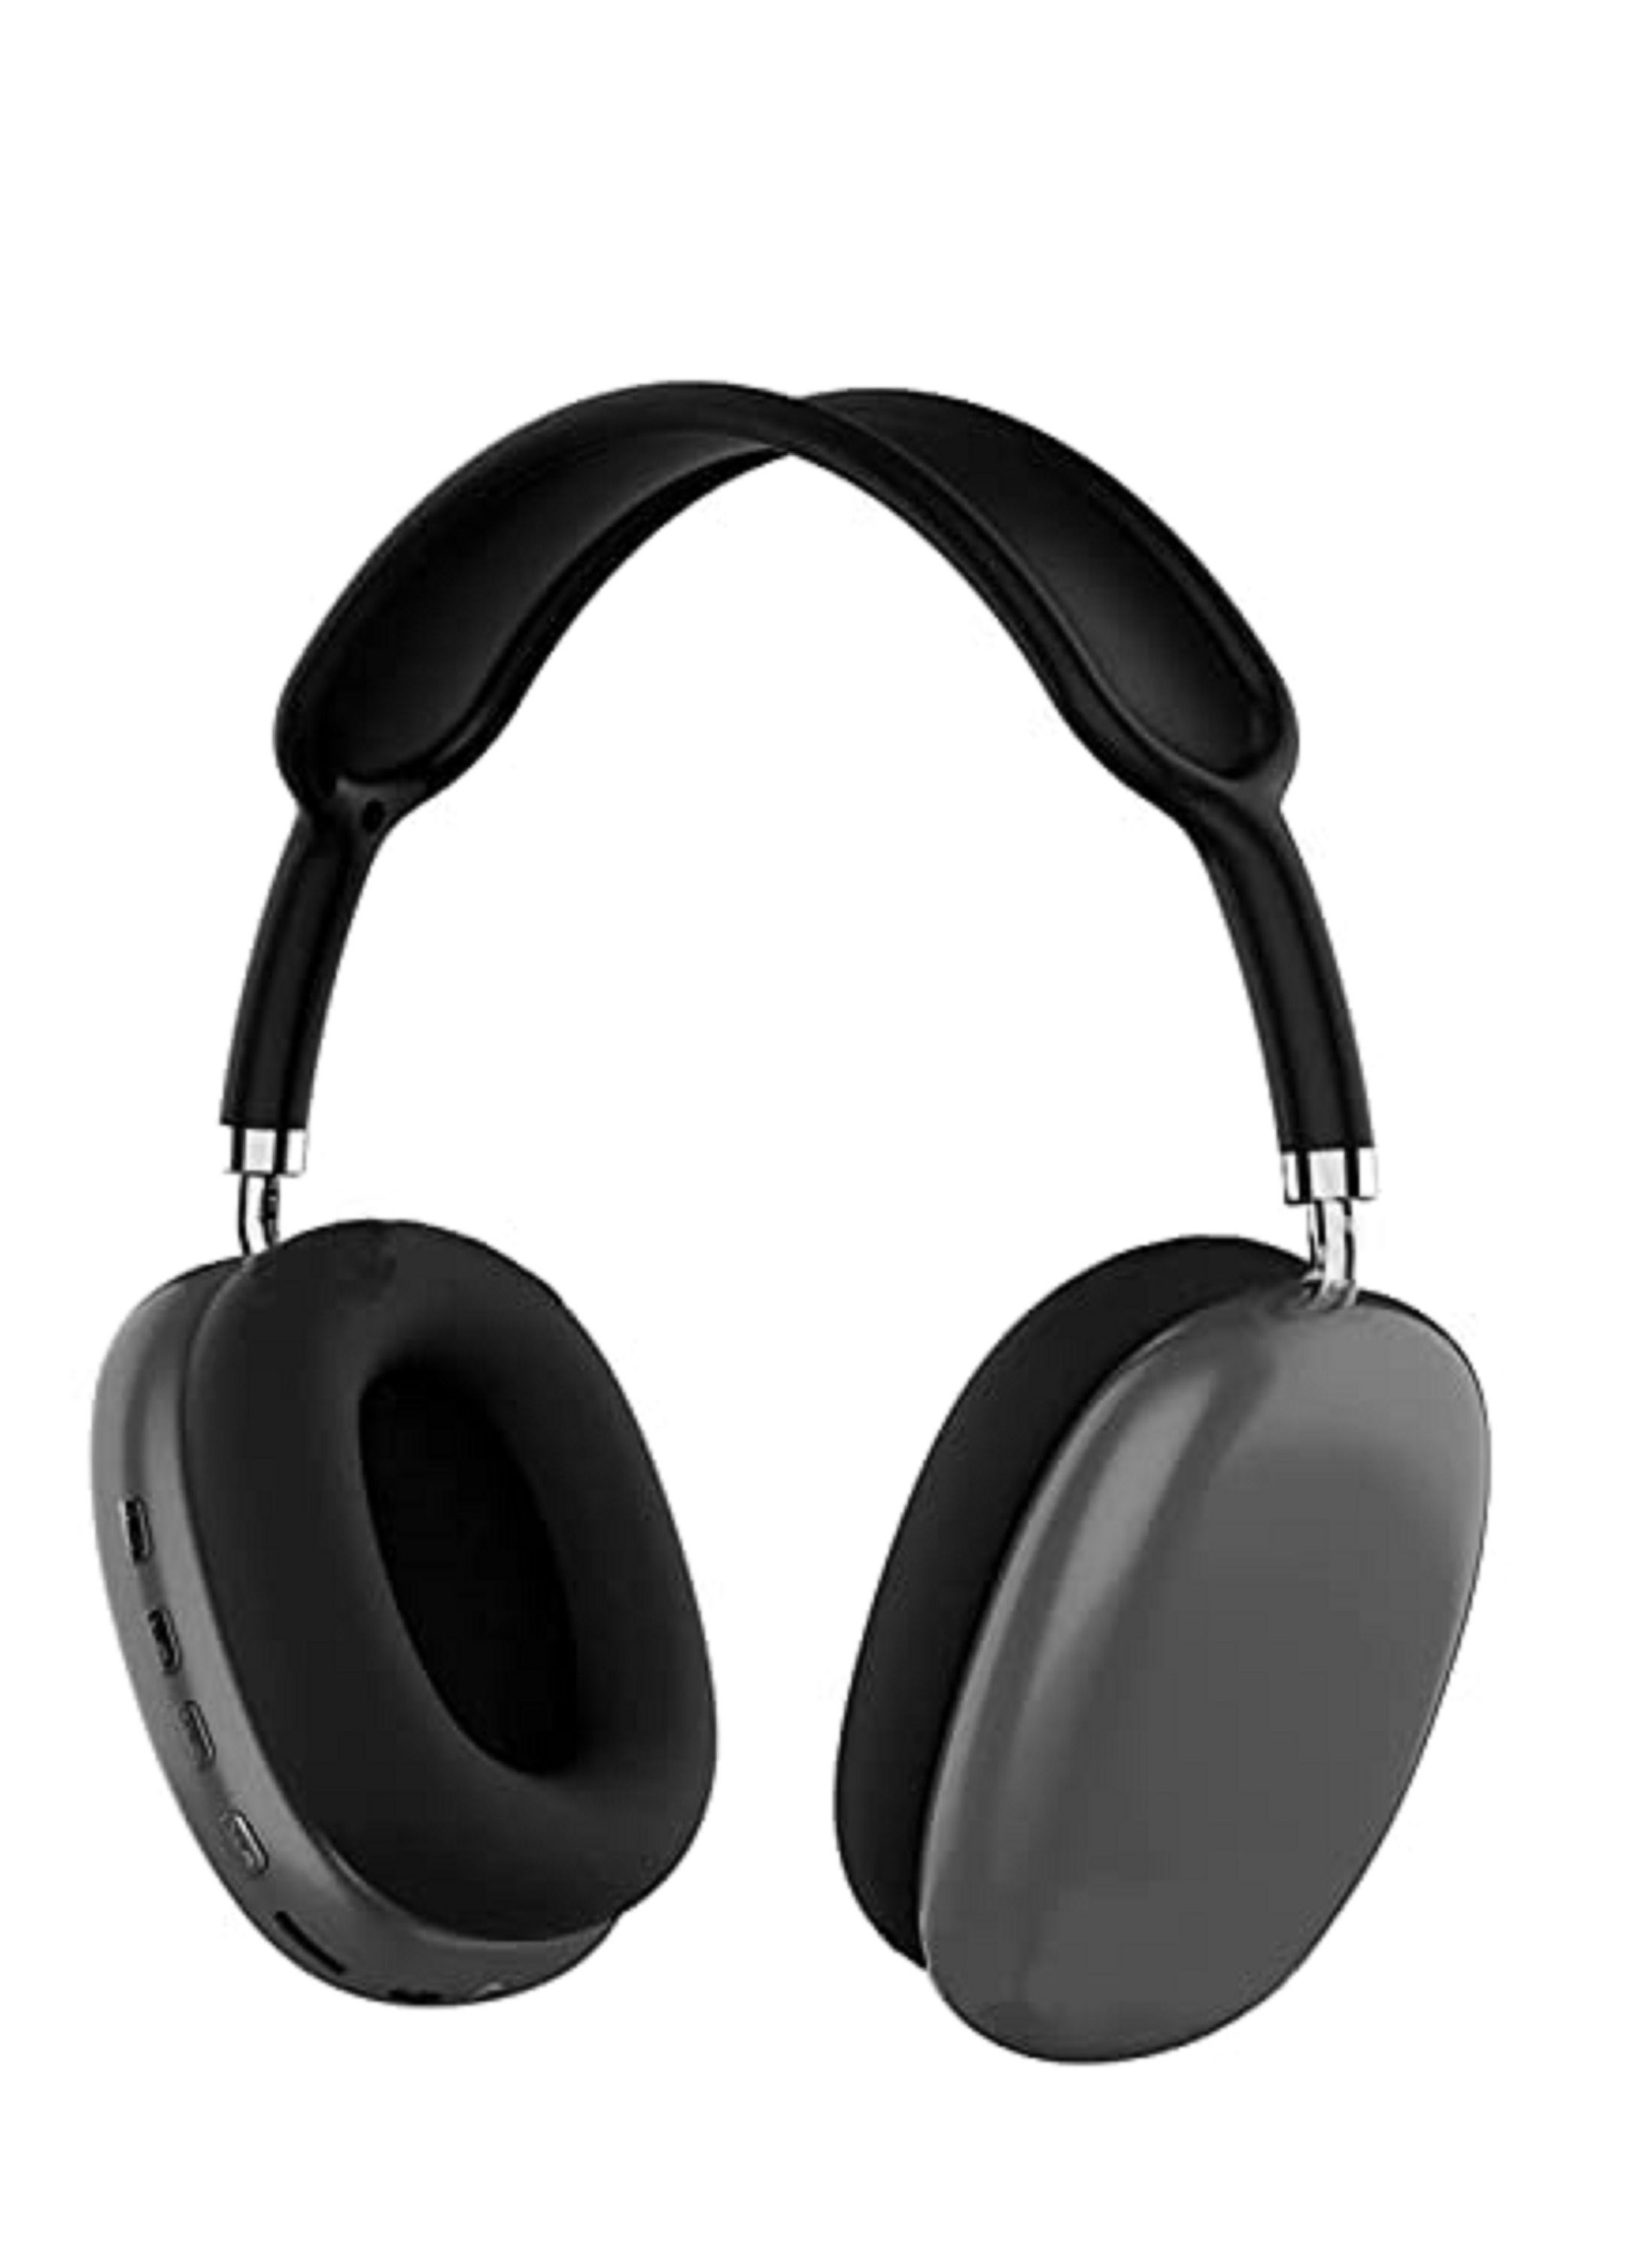 P9 Wireless Headphones with Built-in Microphone - Black